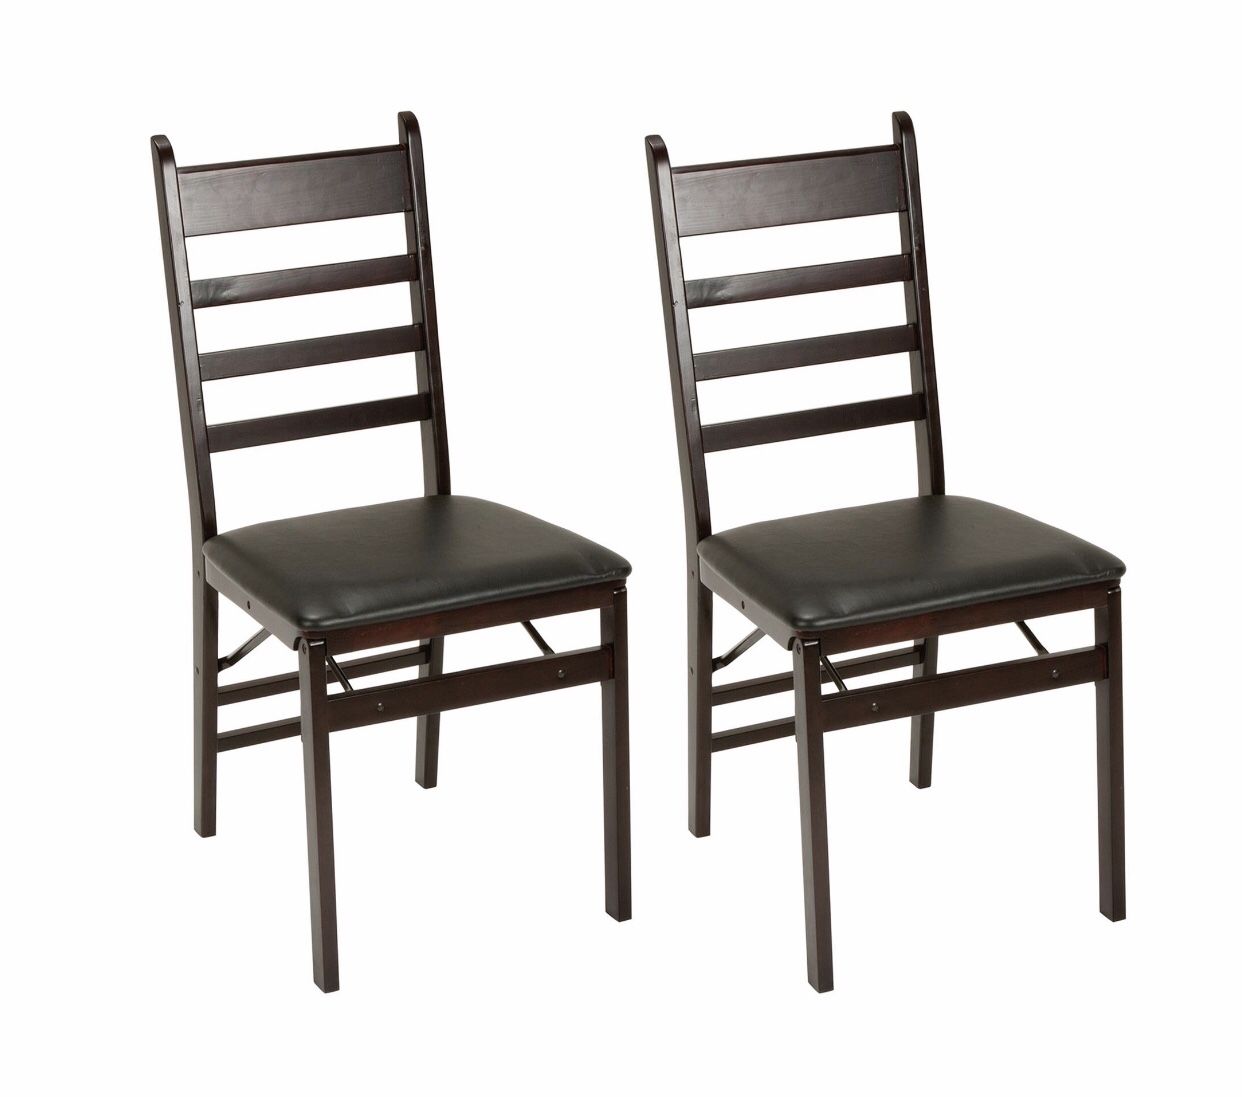 NEW set of 2pcs Ladder Back & Vinyl Seat Wood Folding Chair, Espresso